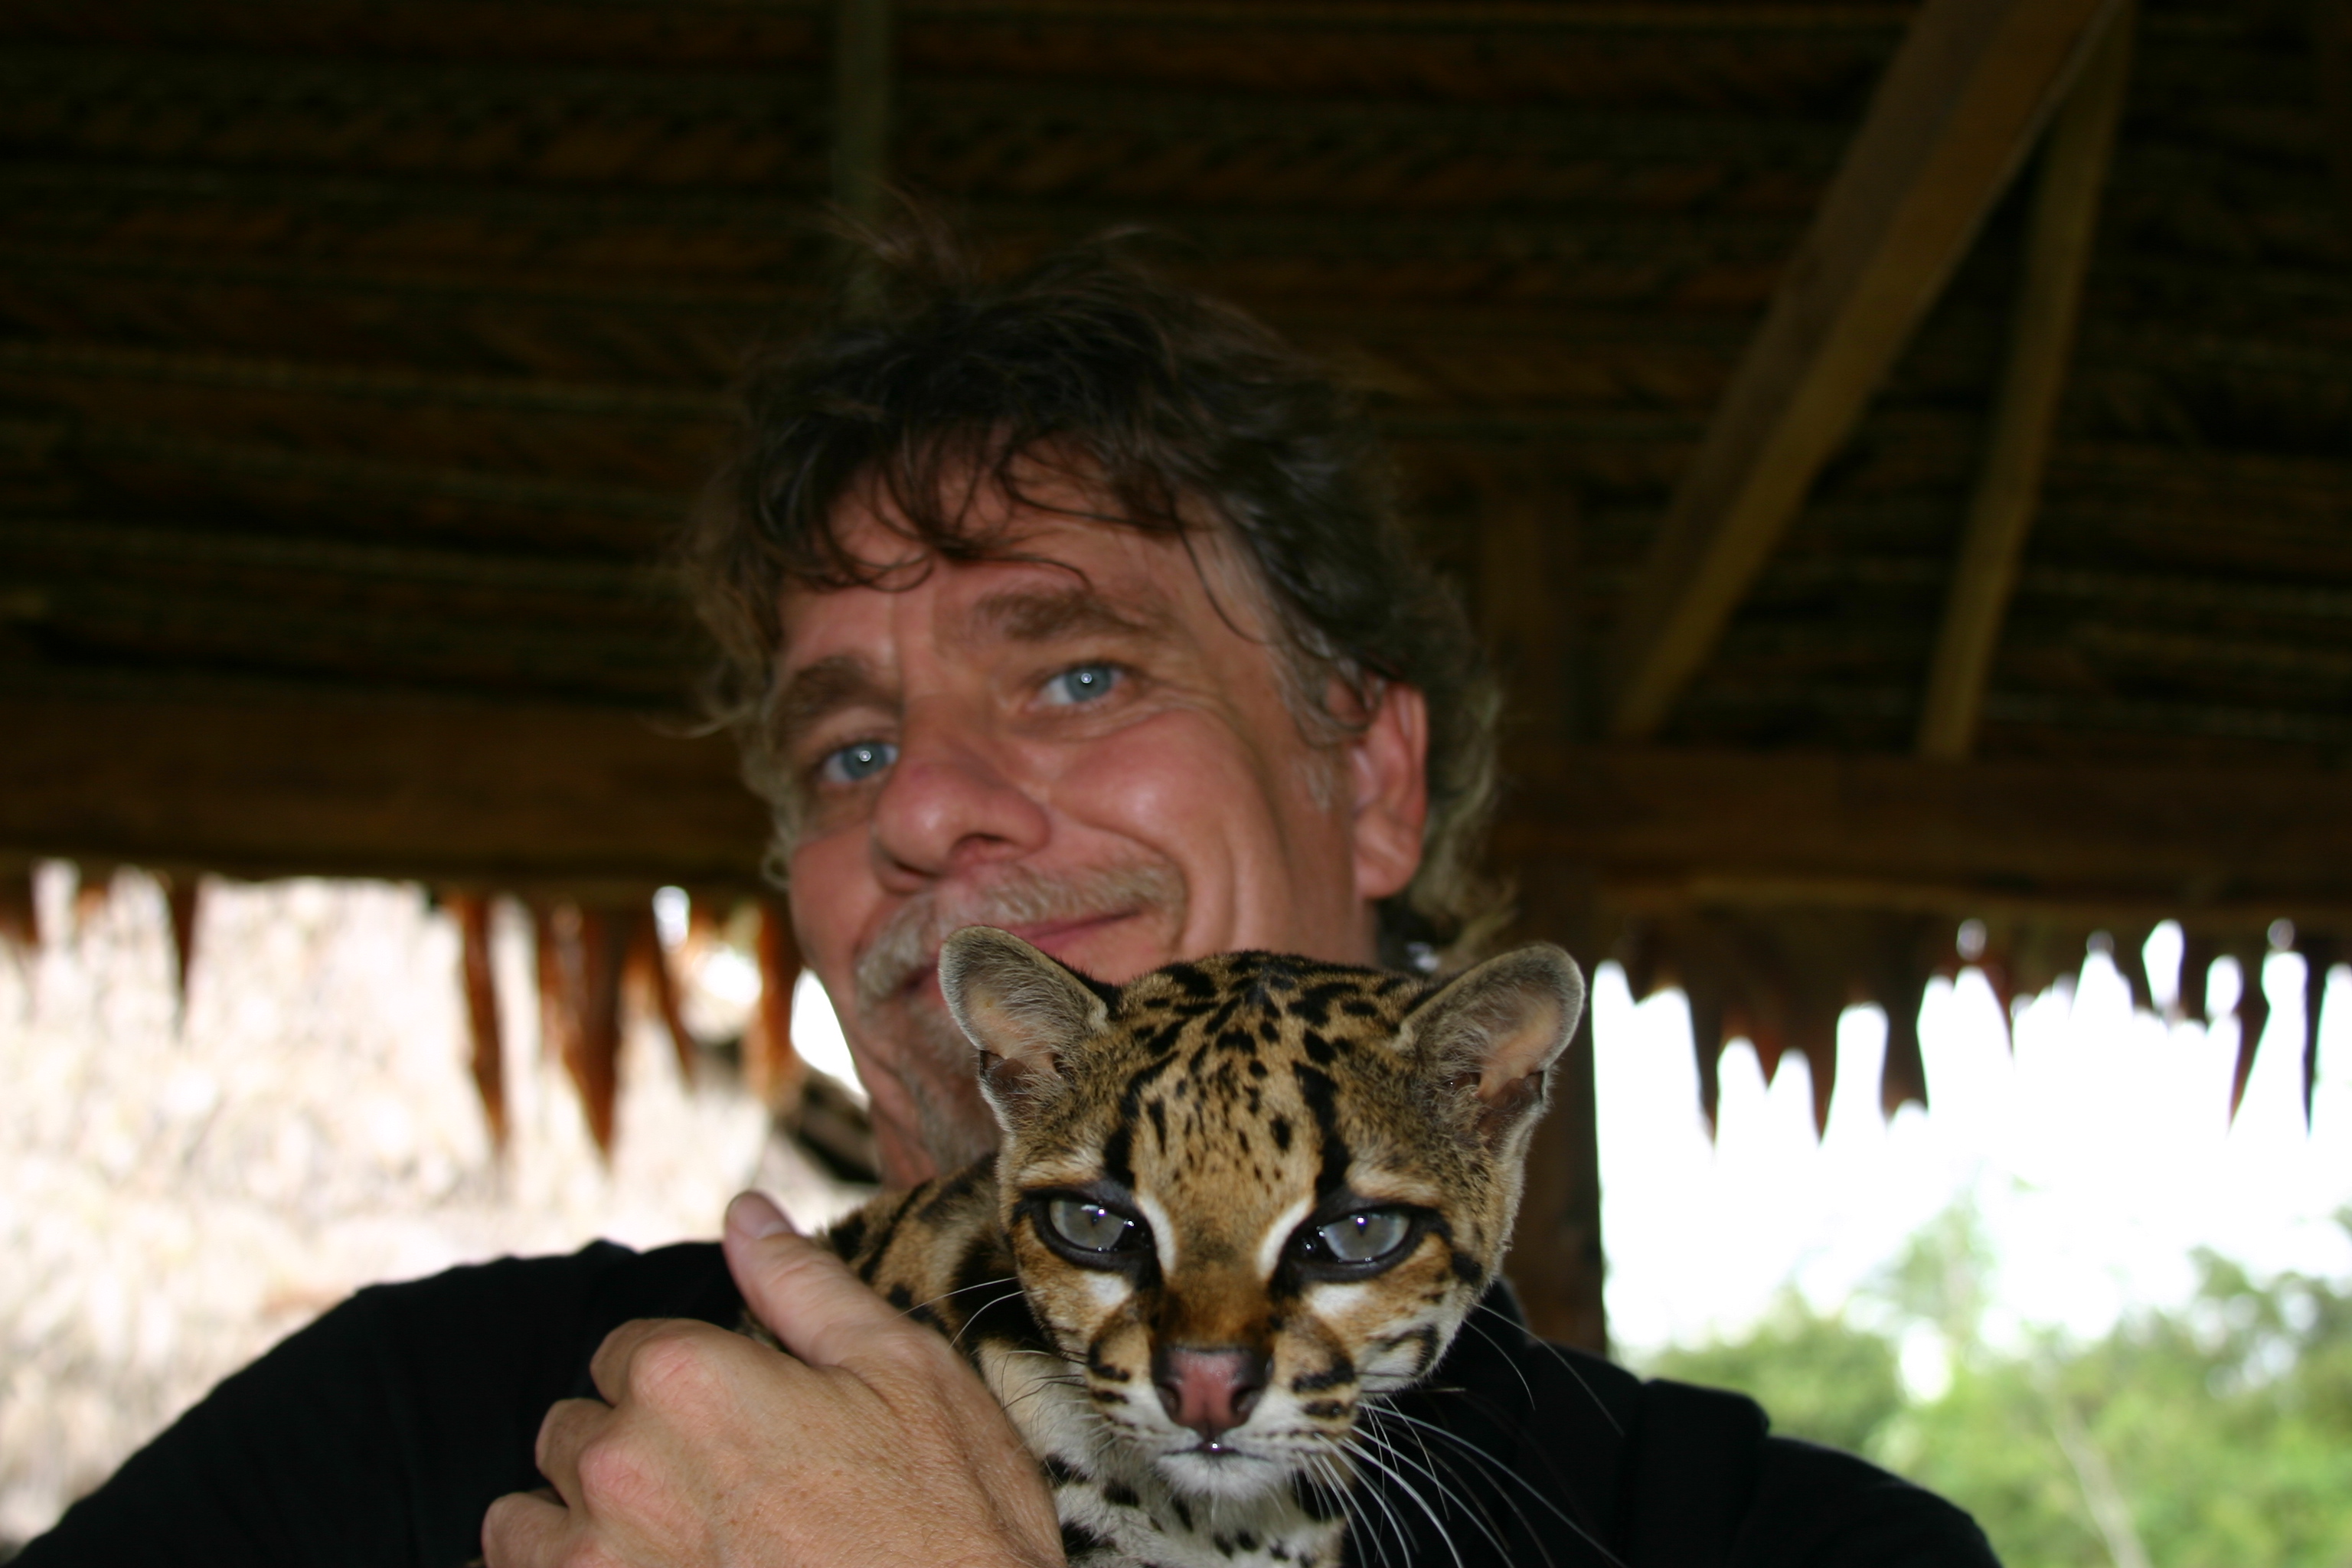 Author Matt Pallamary and a jungle friend